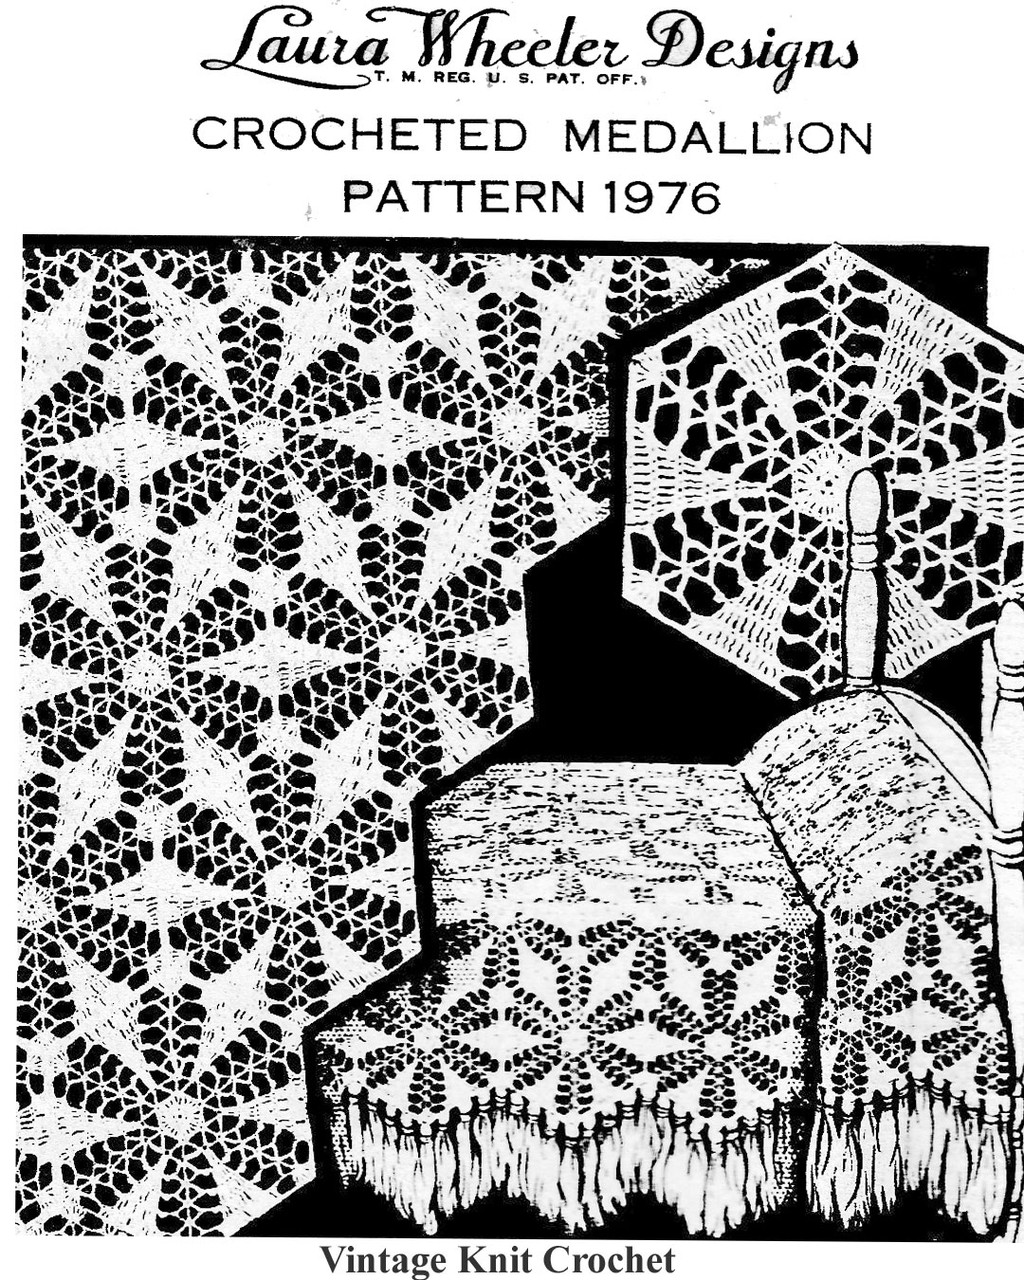 Vintage Crochet Medallion Pattern Laura Wheeler Design 1976